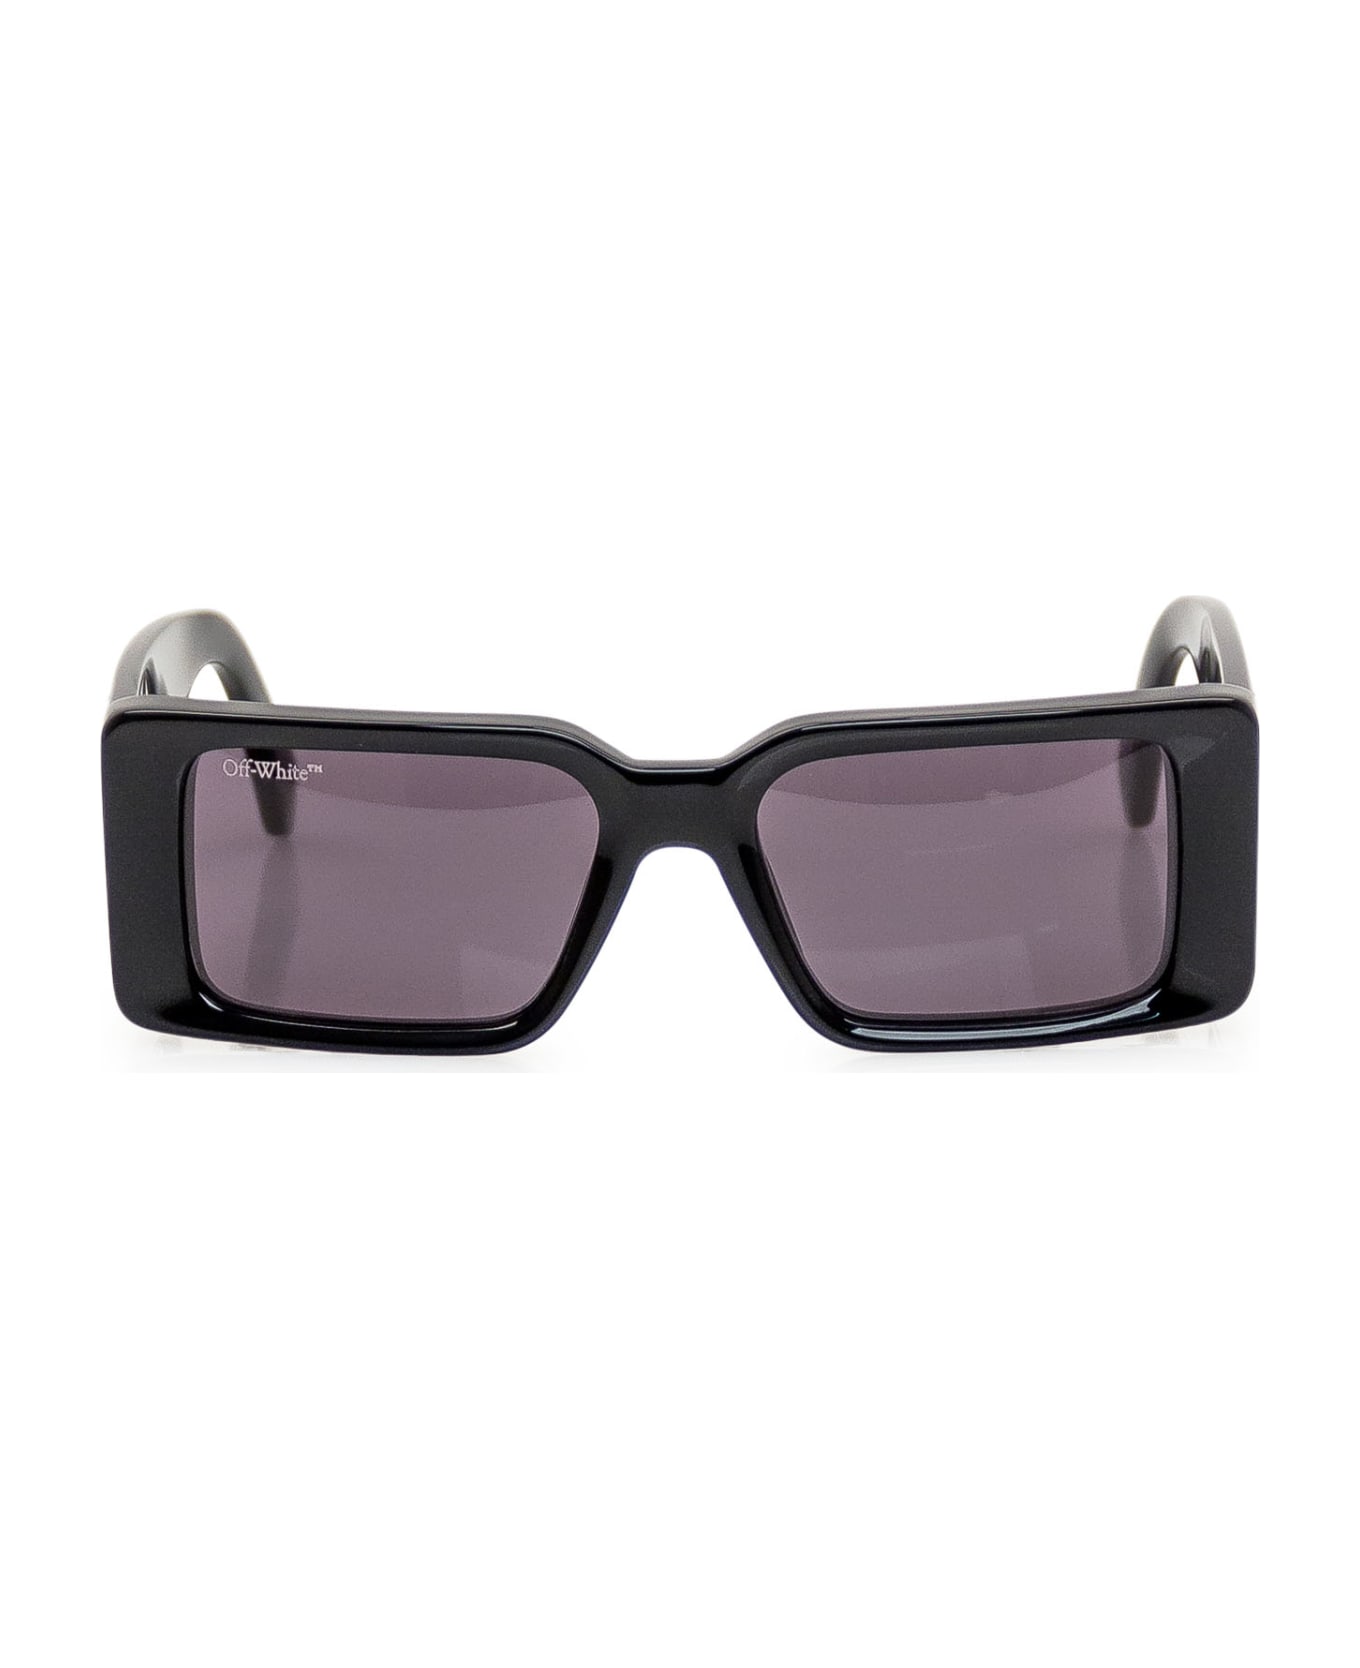 Off-White Milano Sunglasses - BLACK DARK サングラス